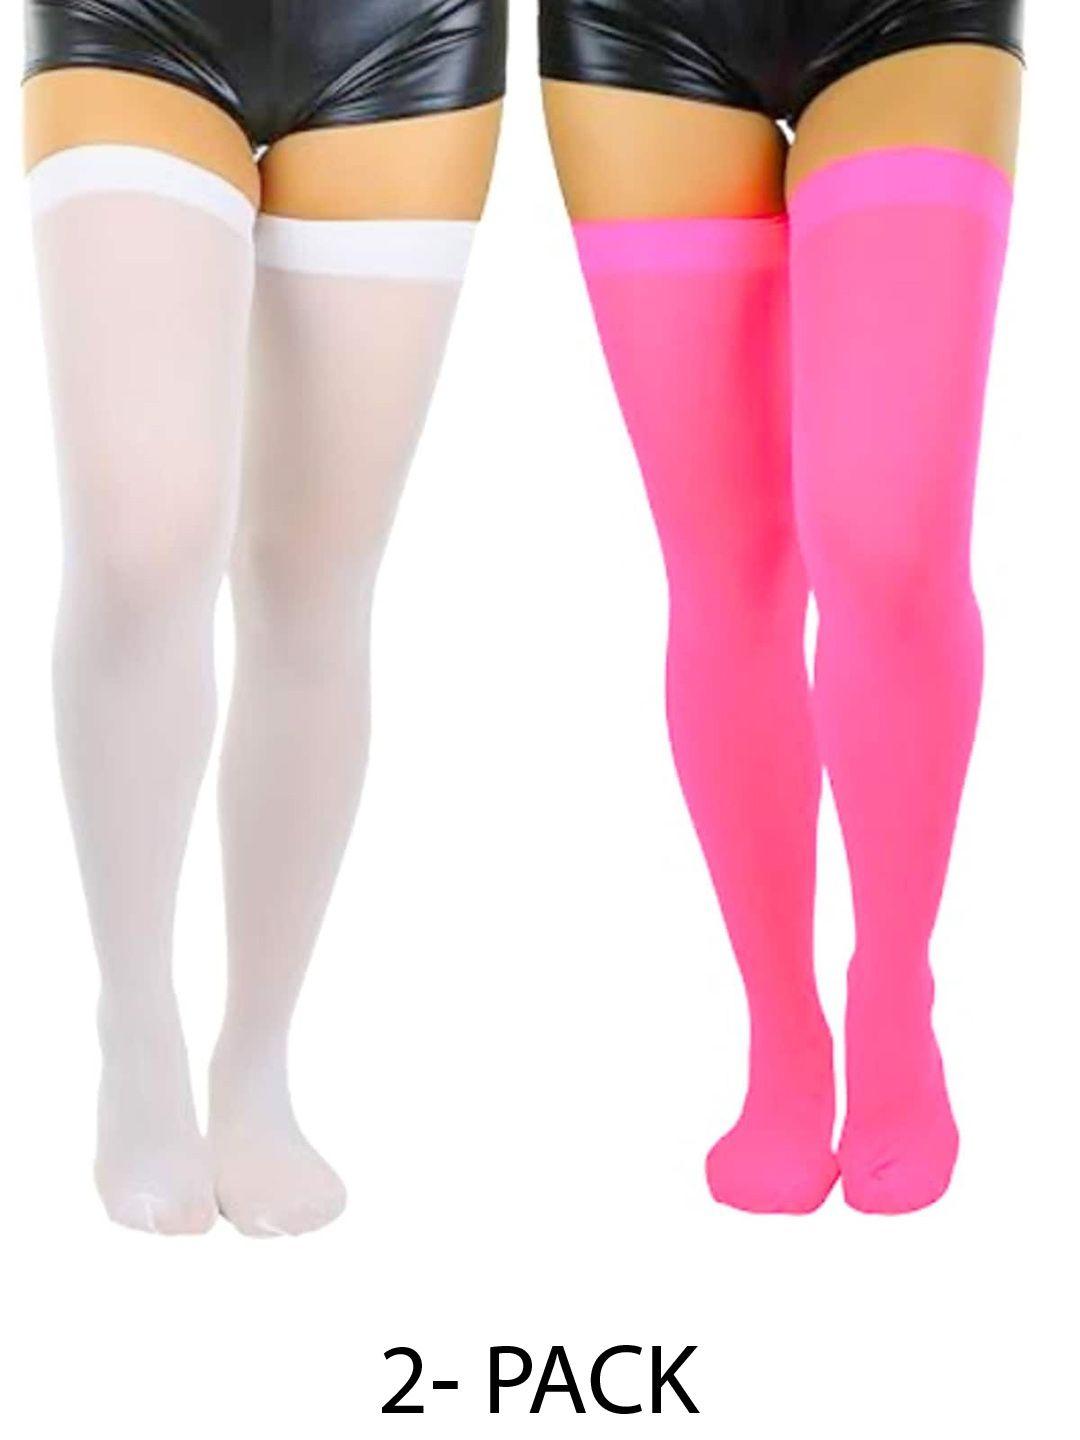 baesd pack of 2 thigh-high sheered stockings